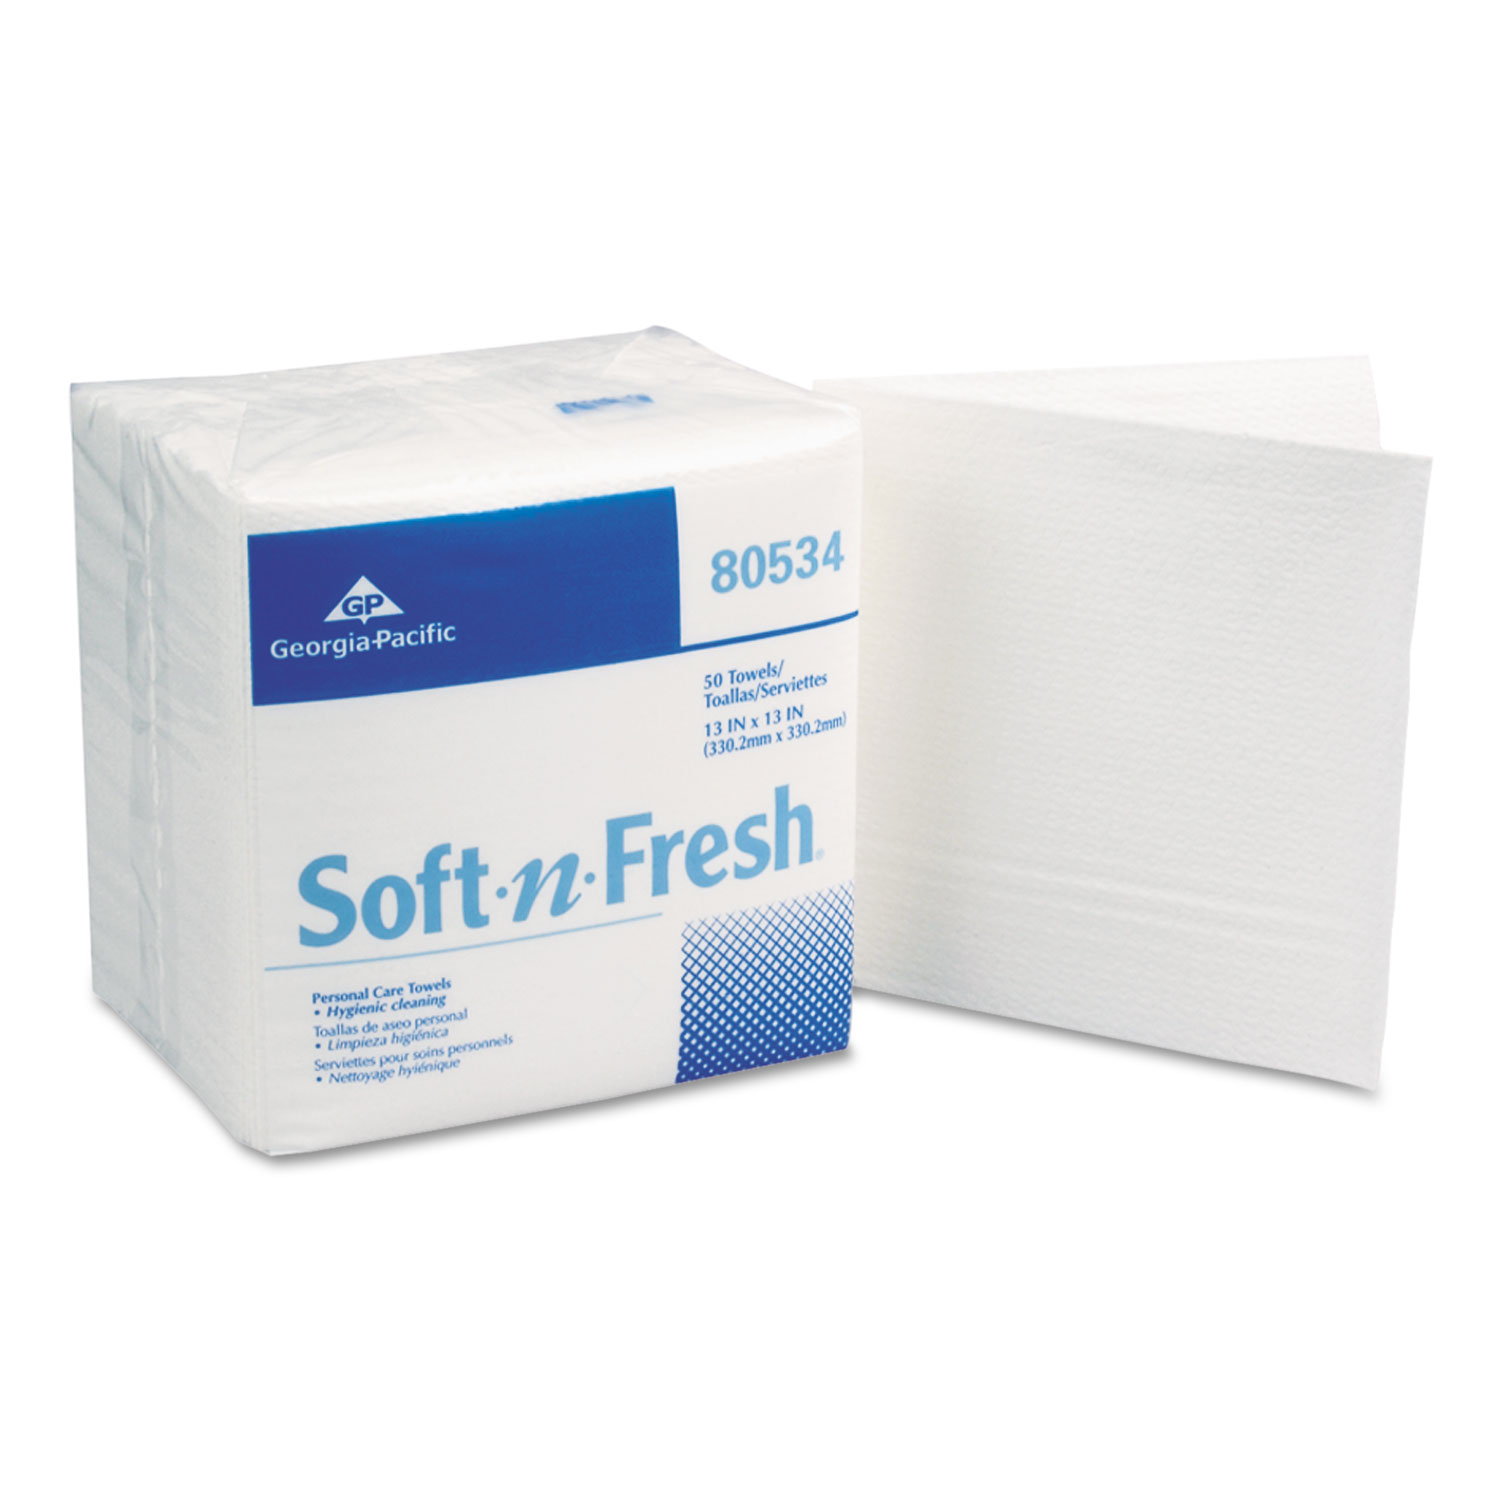  Georgia Pacific 80534 Soft-n-Fresh Patient Care Disposable Wash Cloths, 13x13, White, 50/PK, 20 PK/CT (GPC80534) 